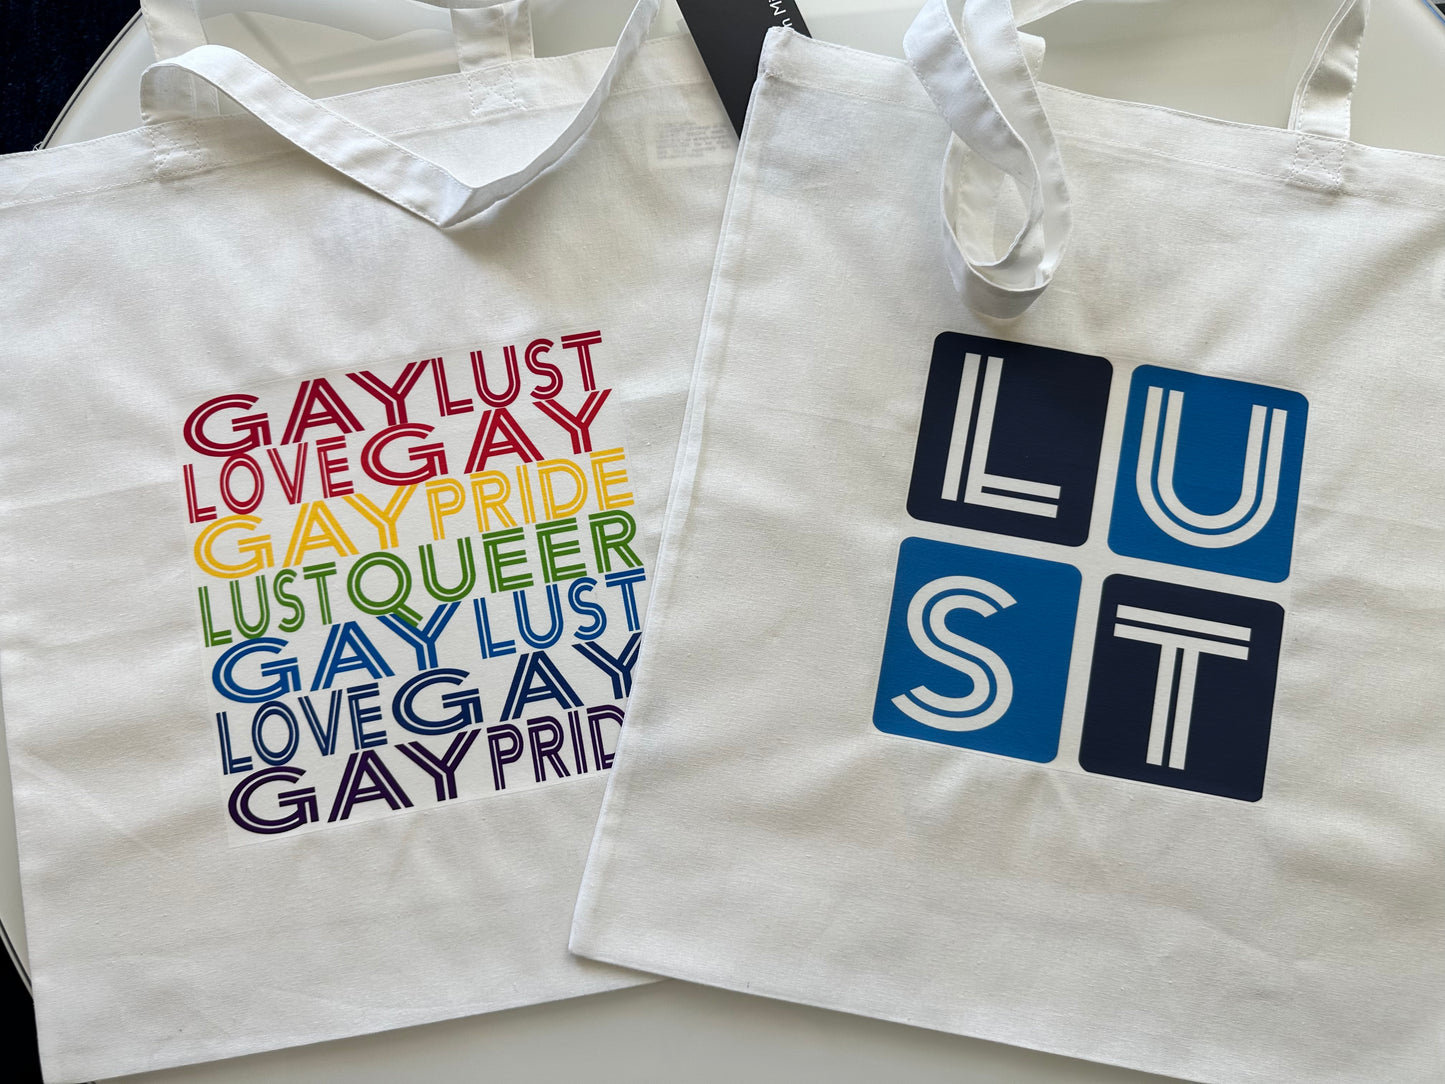 White GAY LUST & LOVE Pride Unisex Cotton Reusable Tote Bag